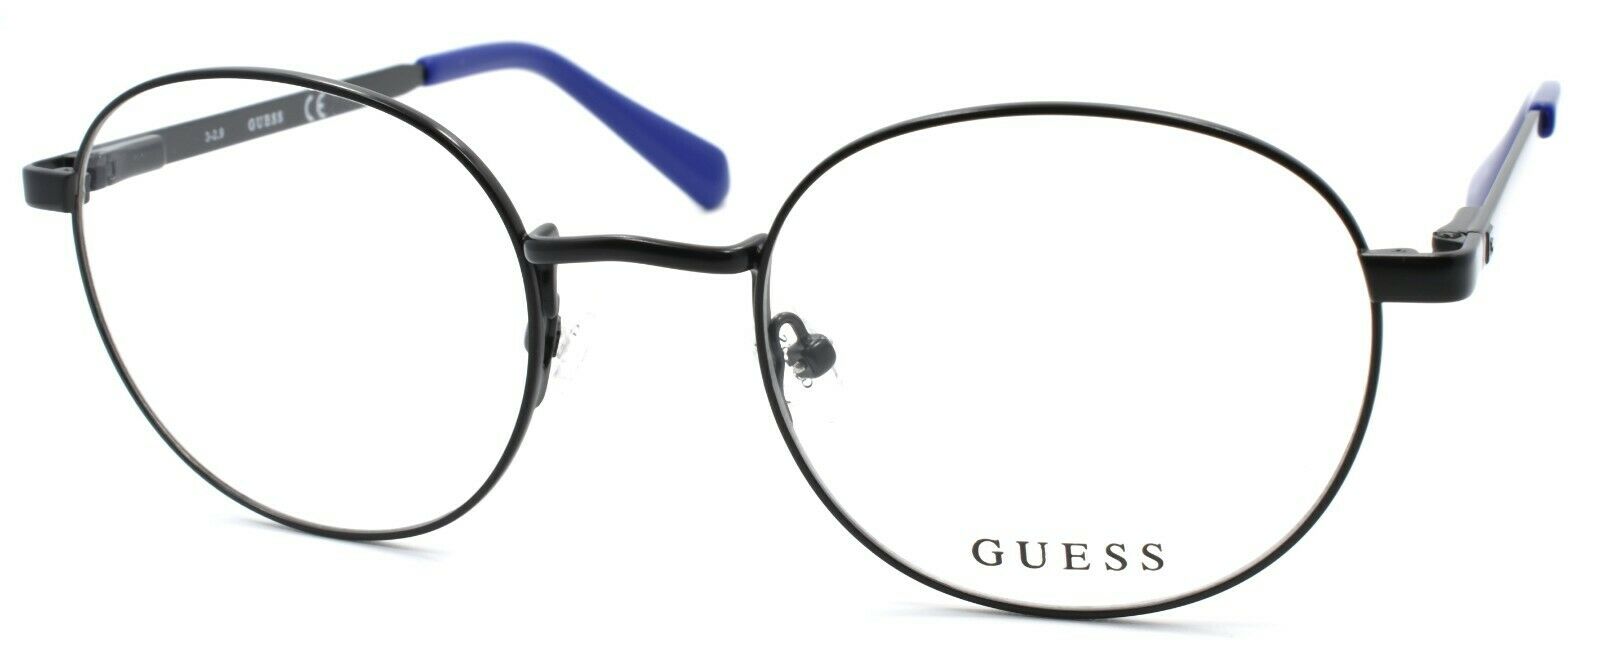 1-GUESS GU1969 005 Men's Eyeglasses Frames Round 50-21-145 Black / Blue-889214043511-IKSpecs